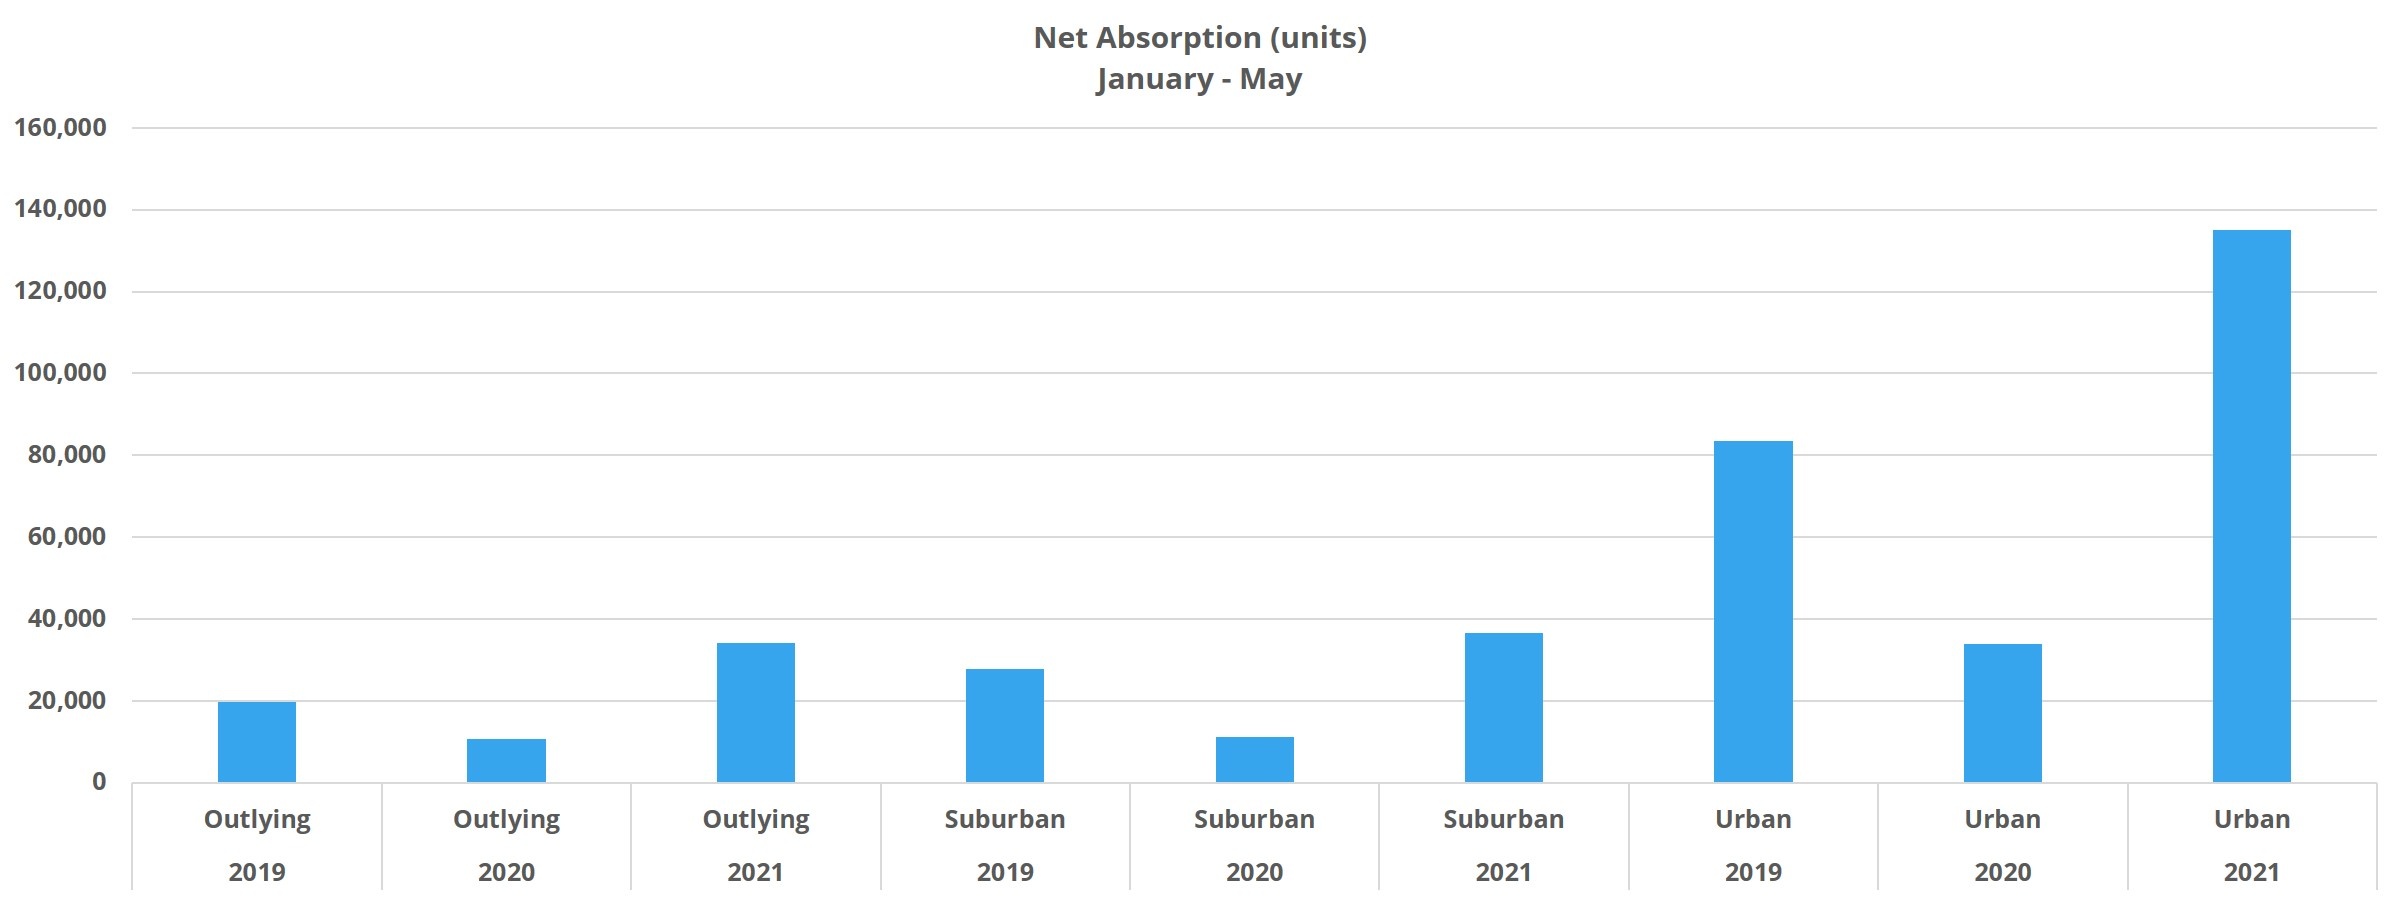 Net Absorption (units)